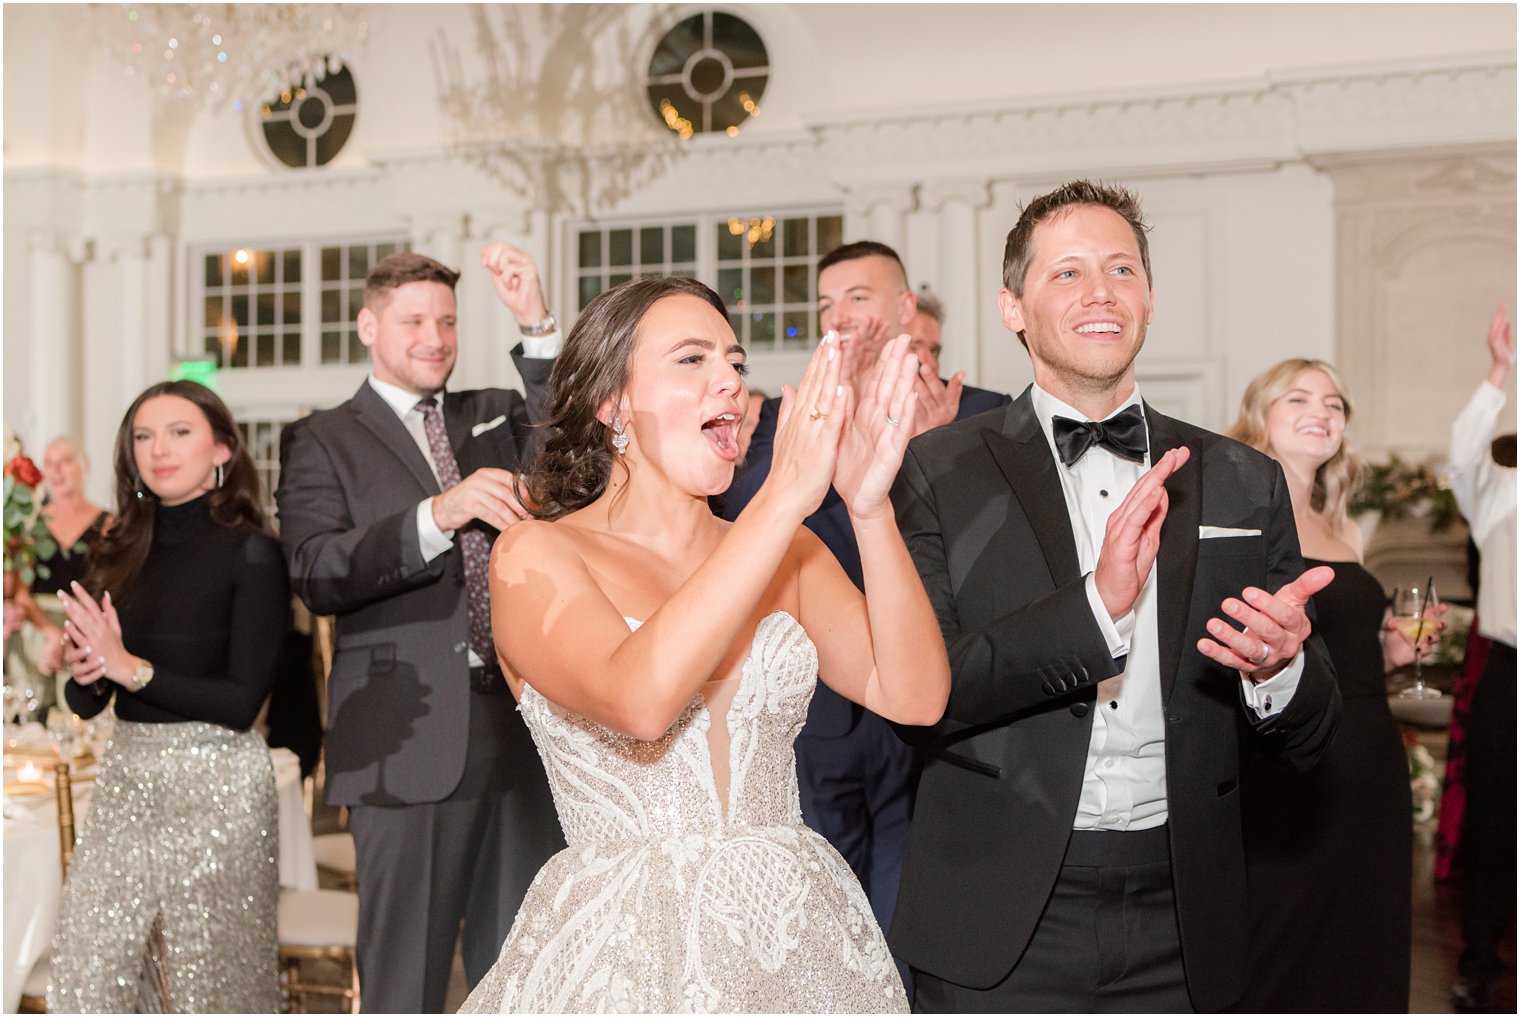 newlyweds clap during dances at East Brunswick NJ wedding reception